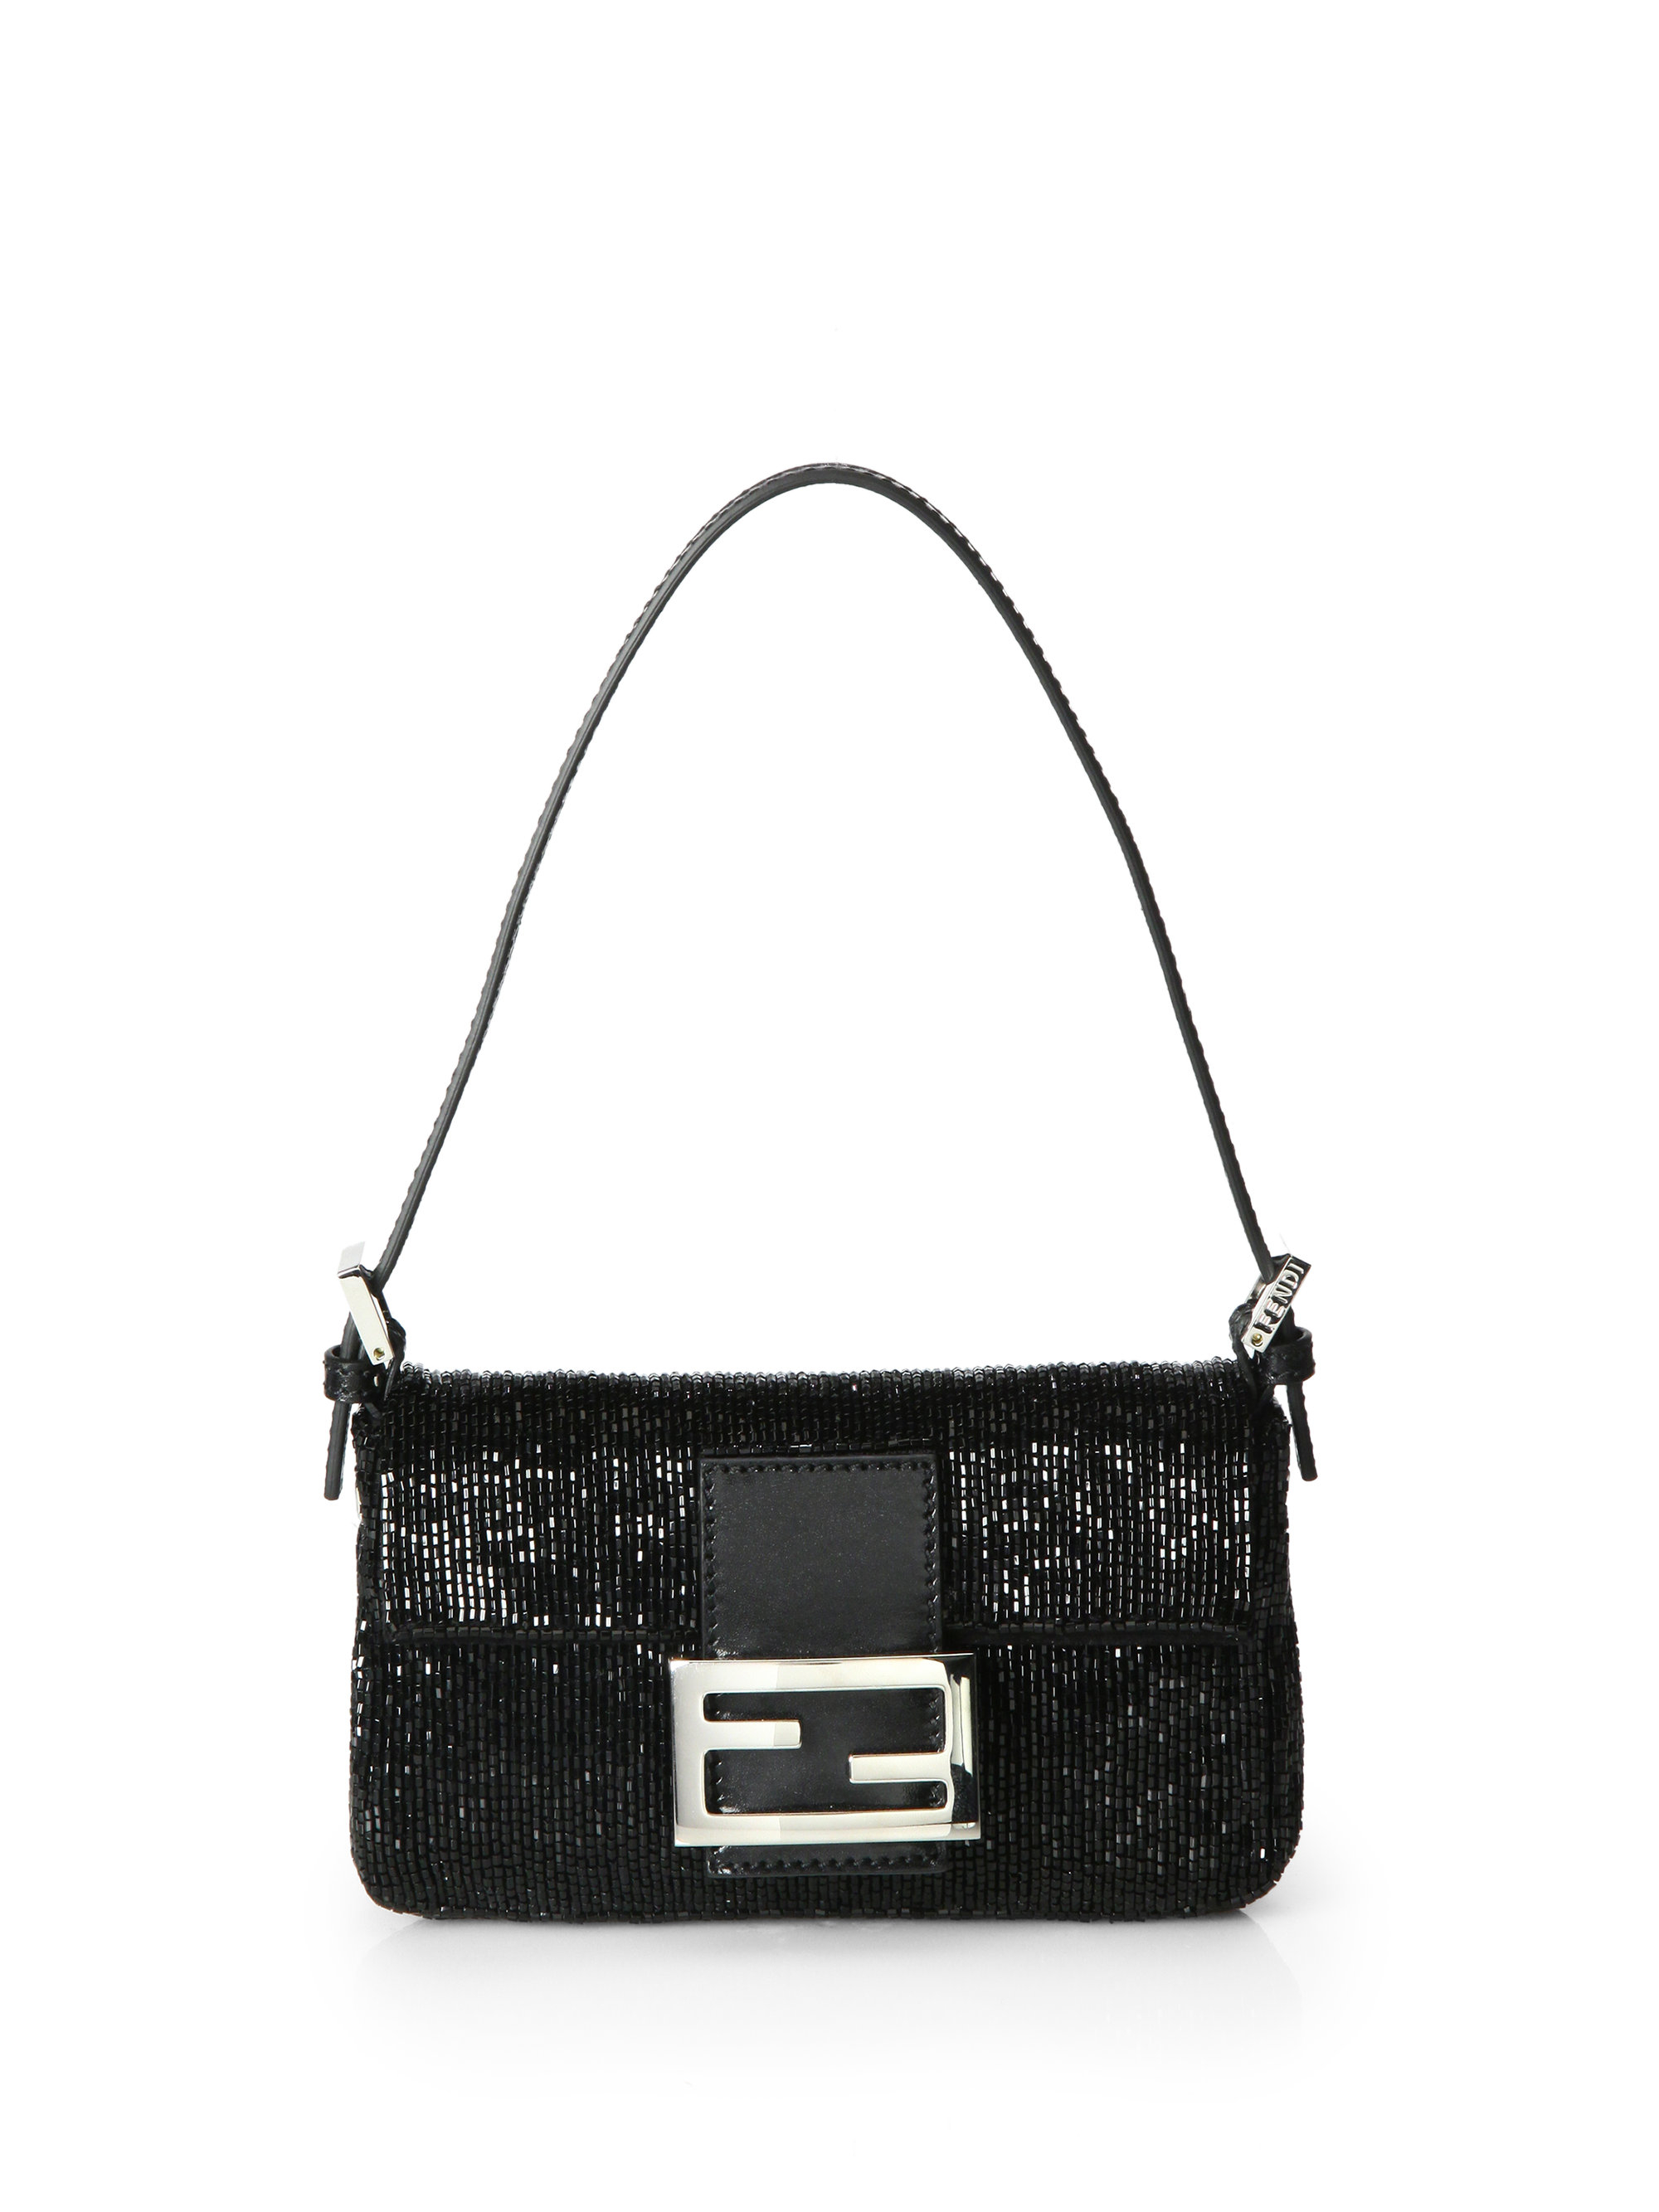 Fendi Beaded Mini Baguette Shoulder Bag in Black | Lyst